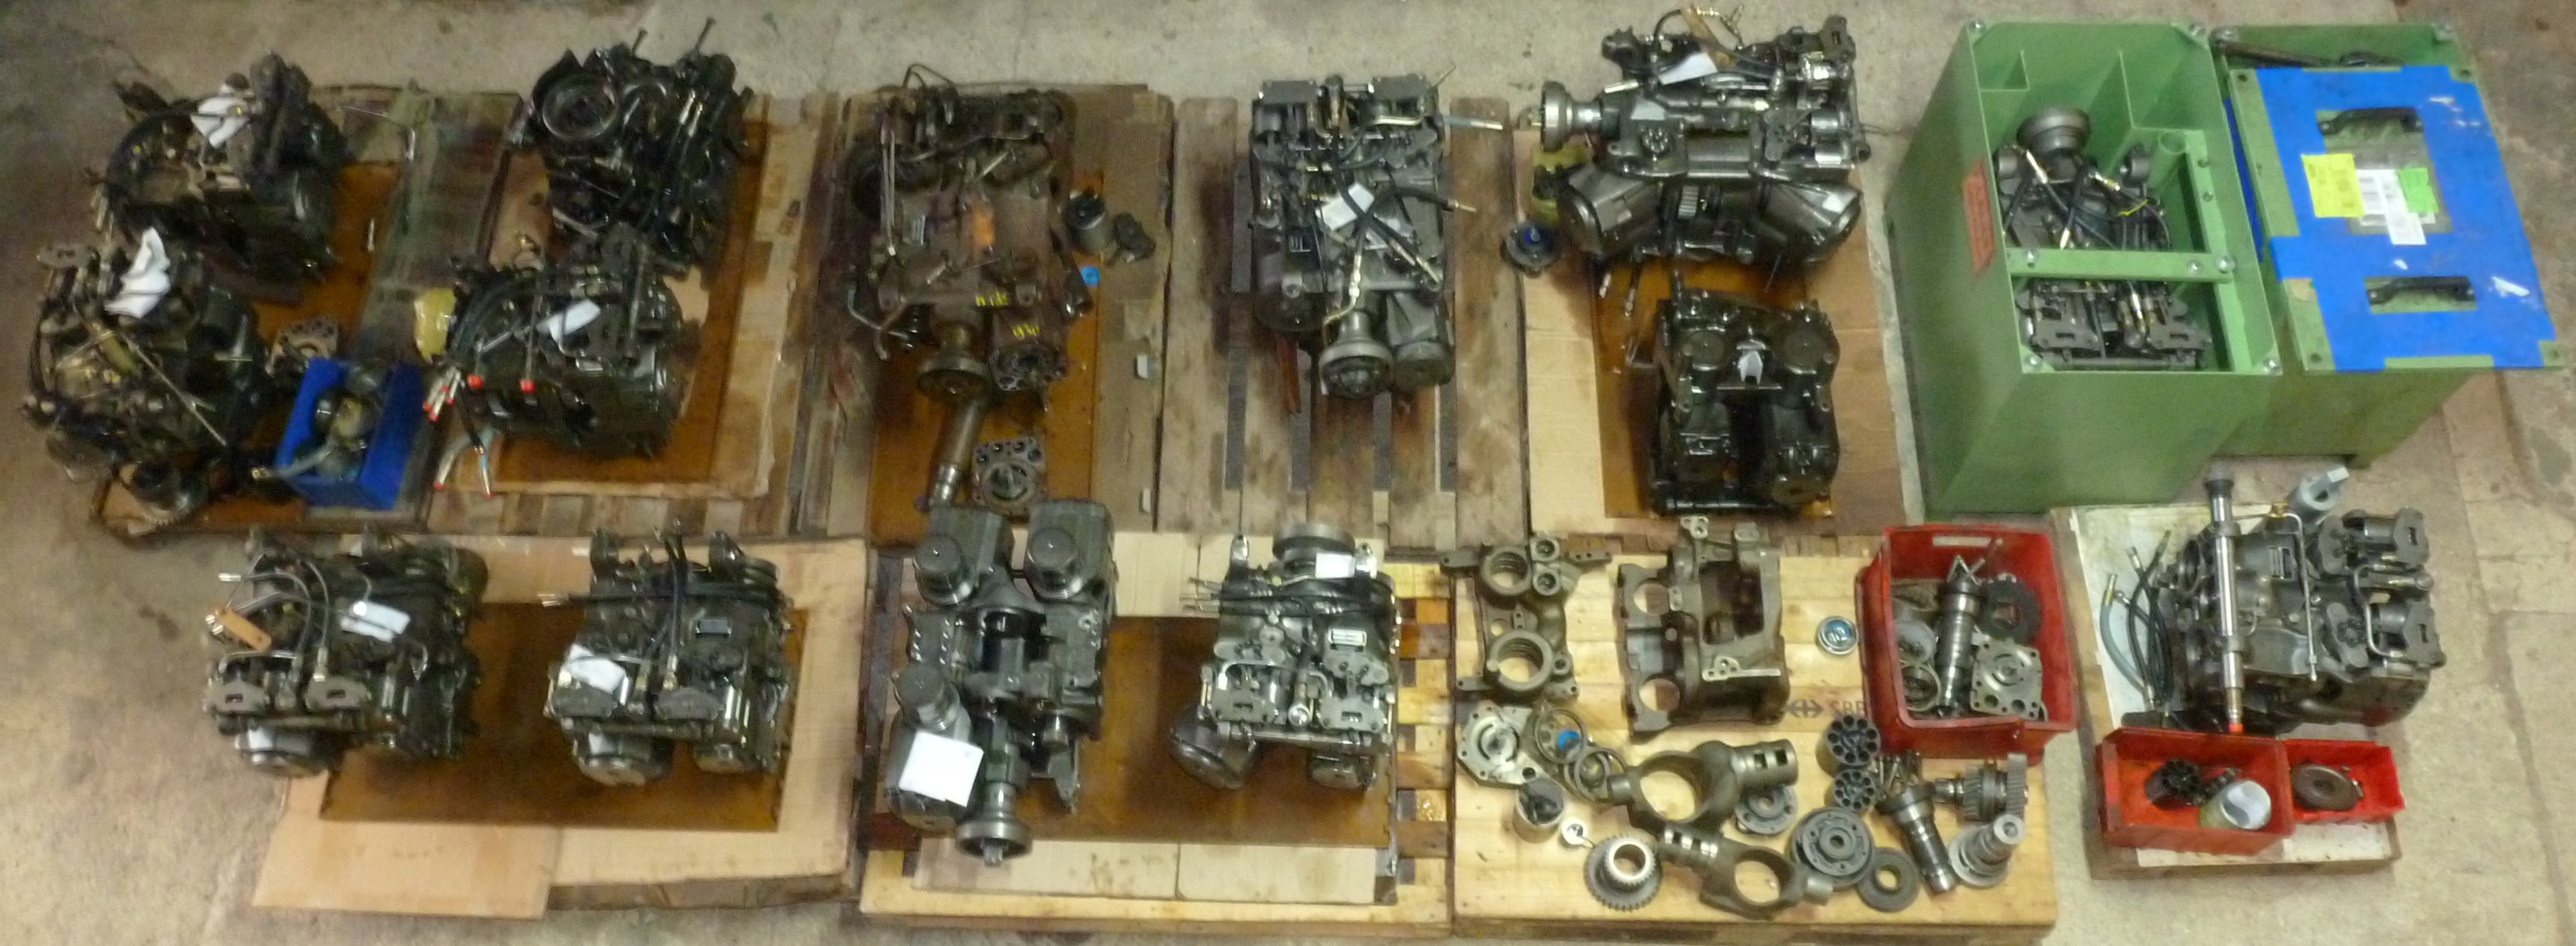 Repairing Vario gearbox Fendt JCB Fastrac Massey Ferguson Dyna vt